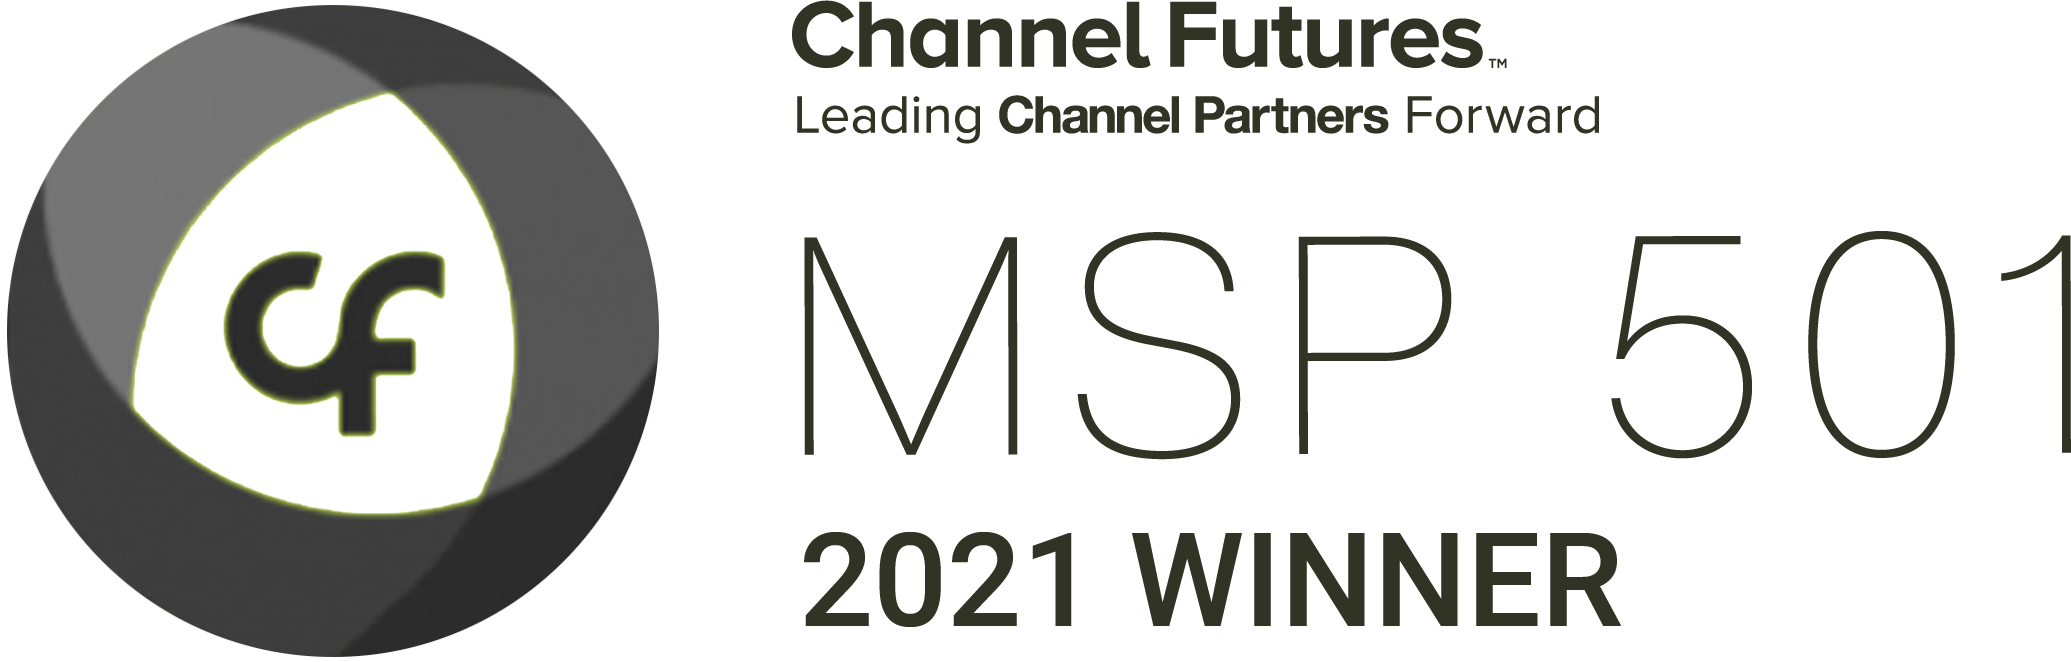 Cp 1381 Msp 501 Winner Logo 2021 V1 1 | Managed It Services